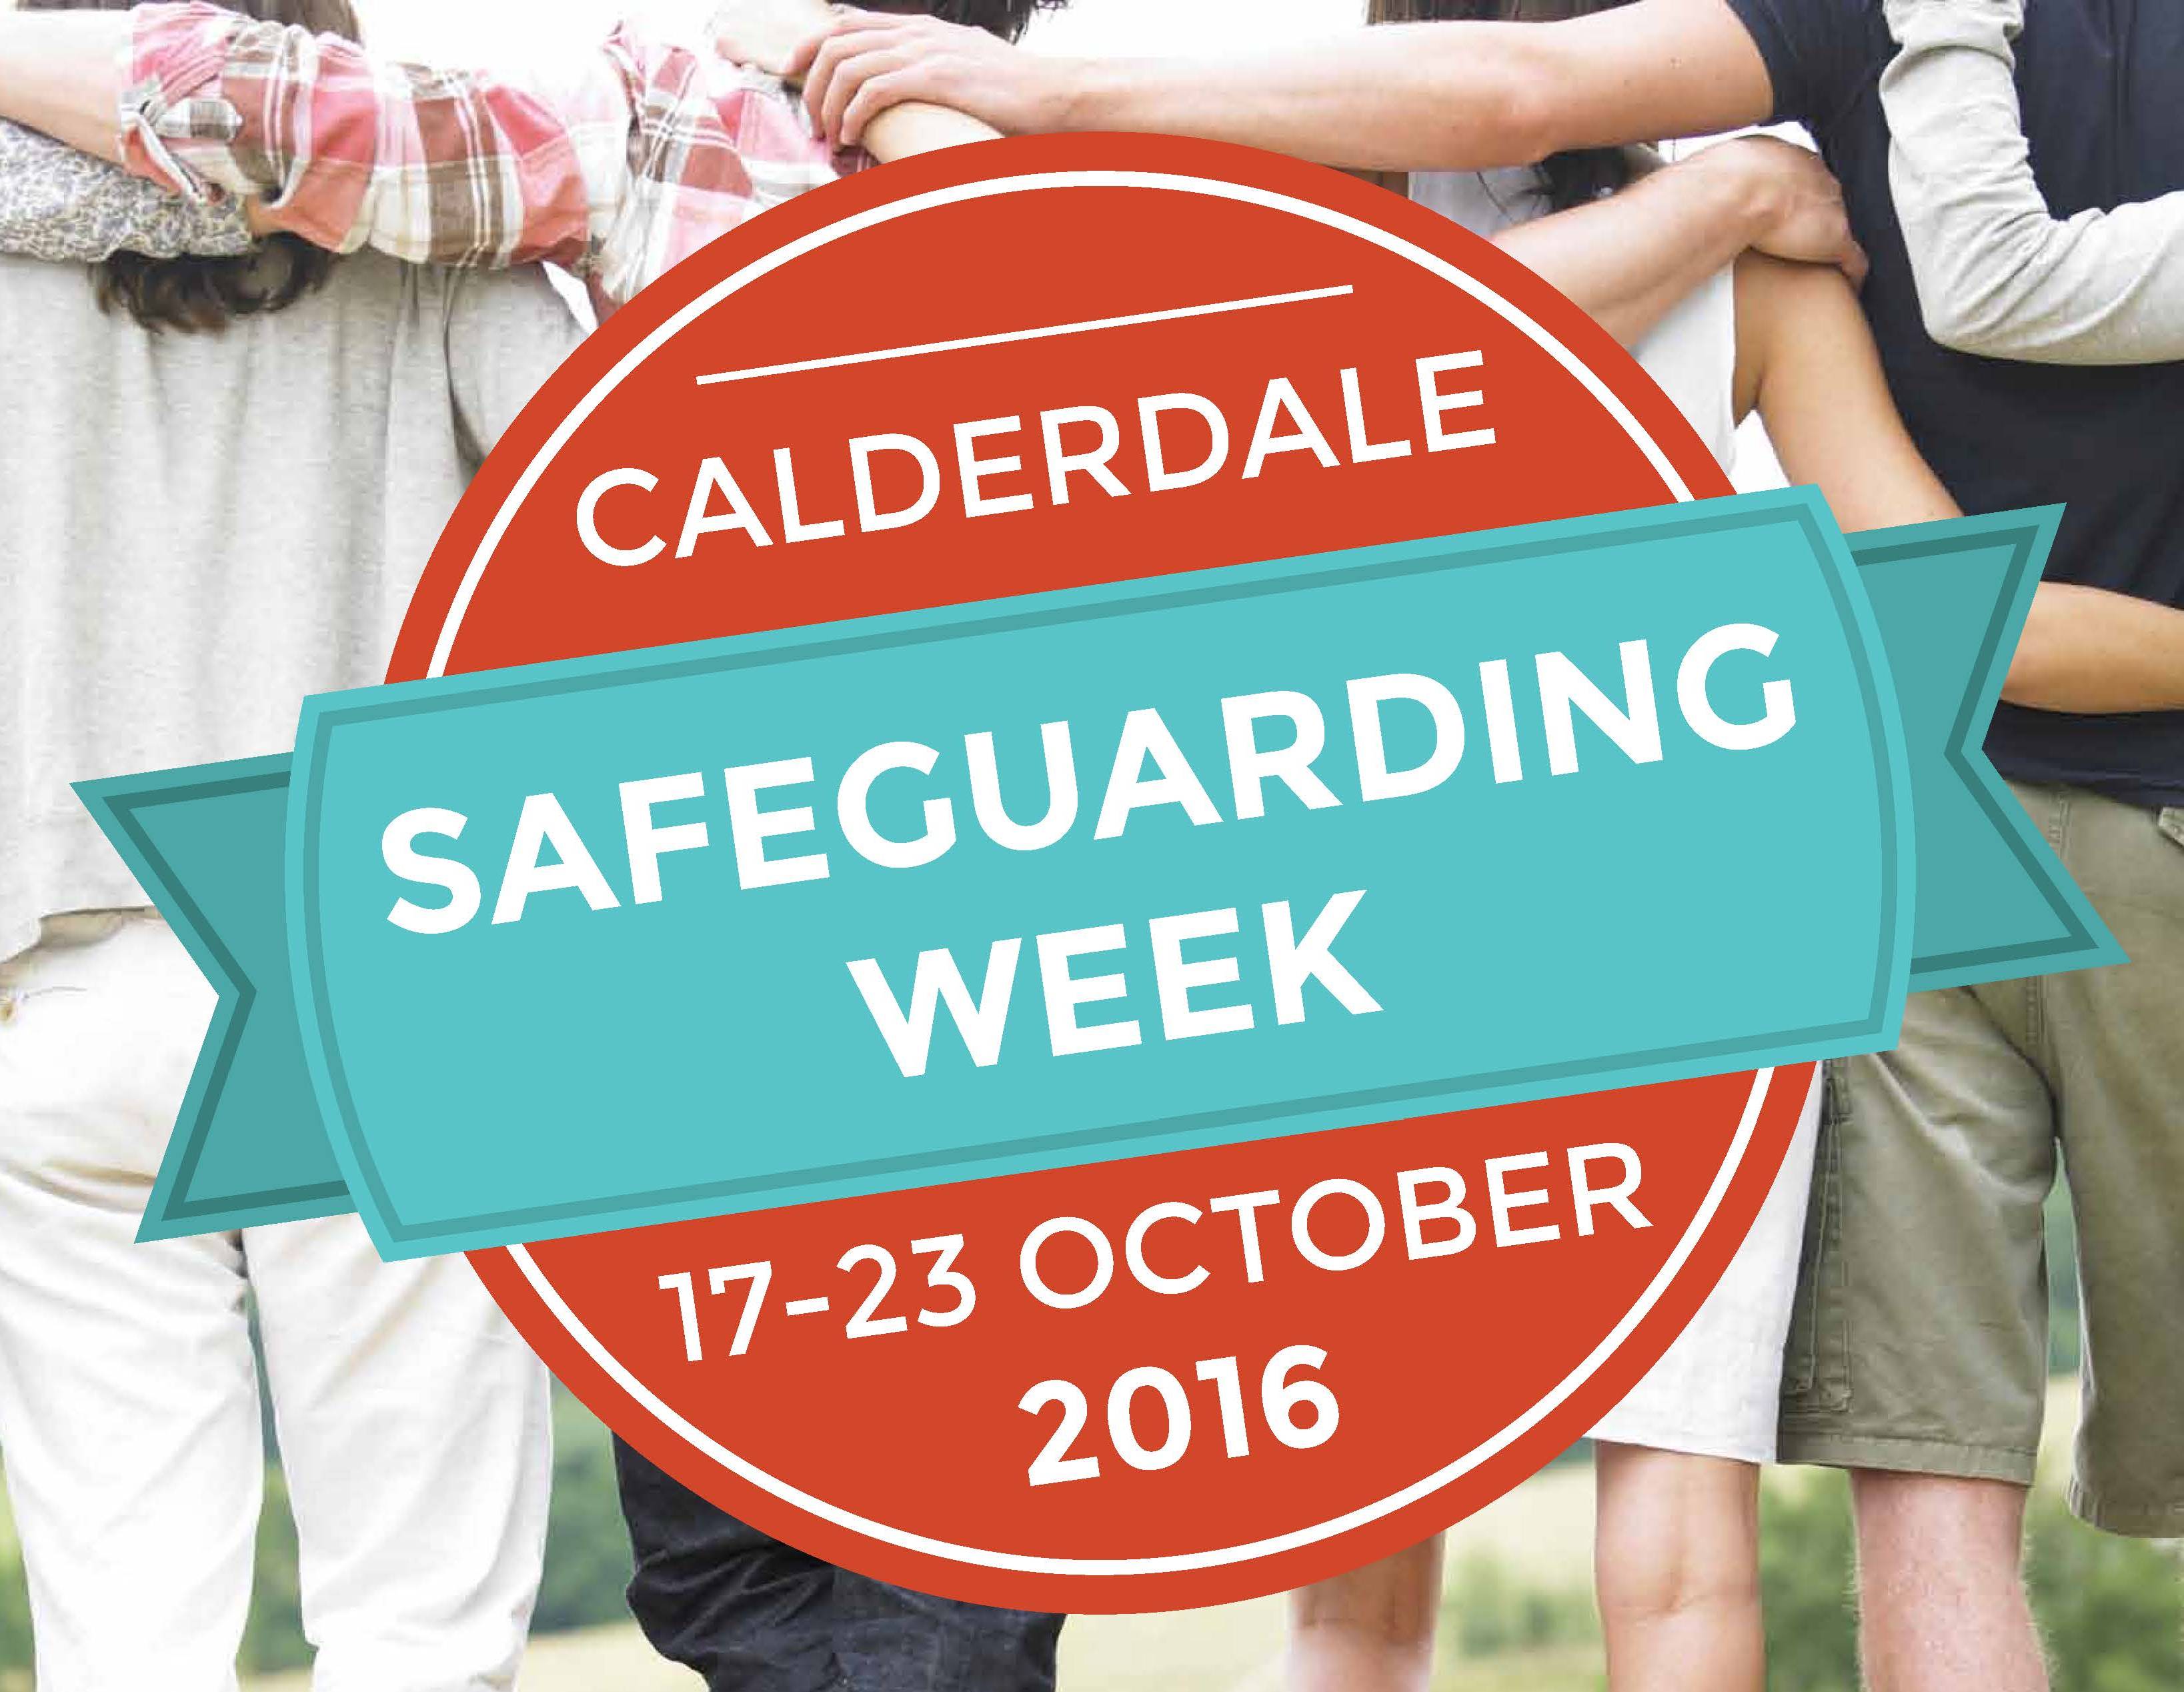 Safeguarding week